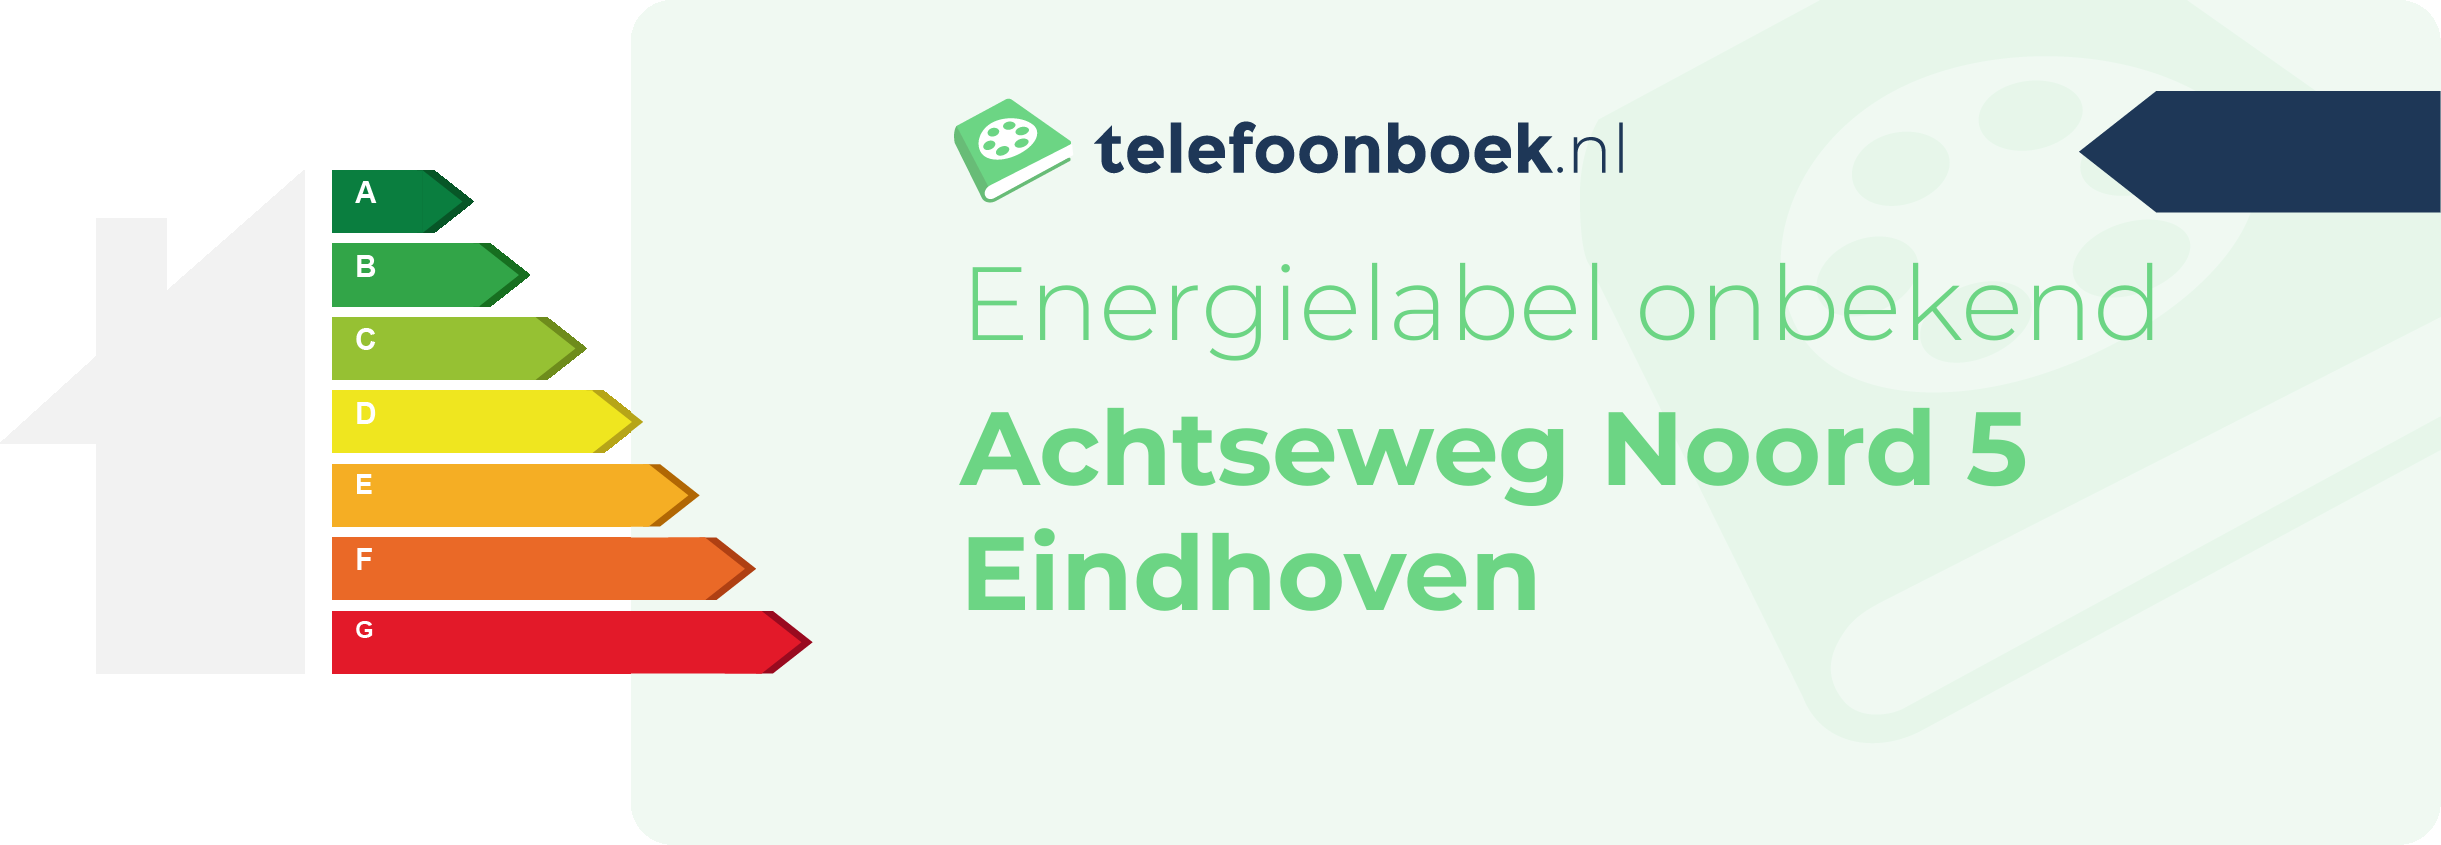 Energielabel Achtseweg Noord 5 Eindhoven